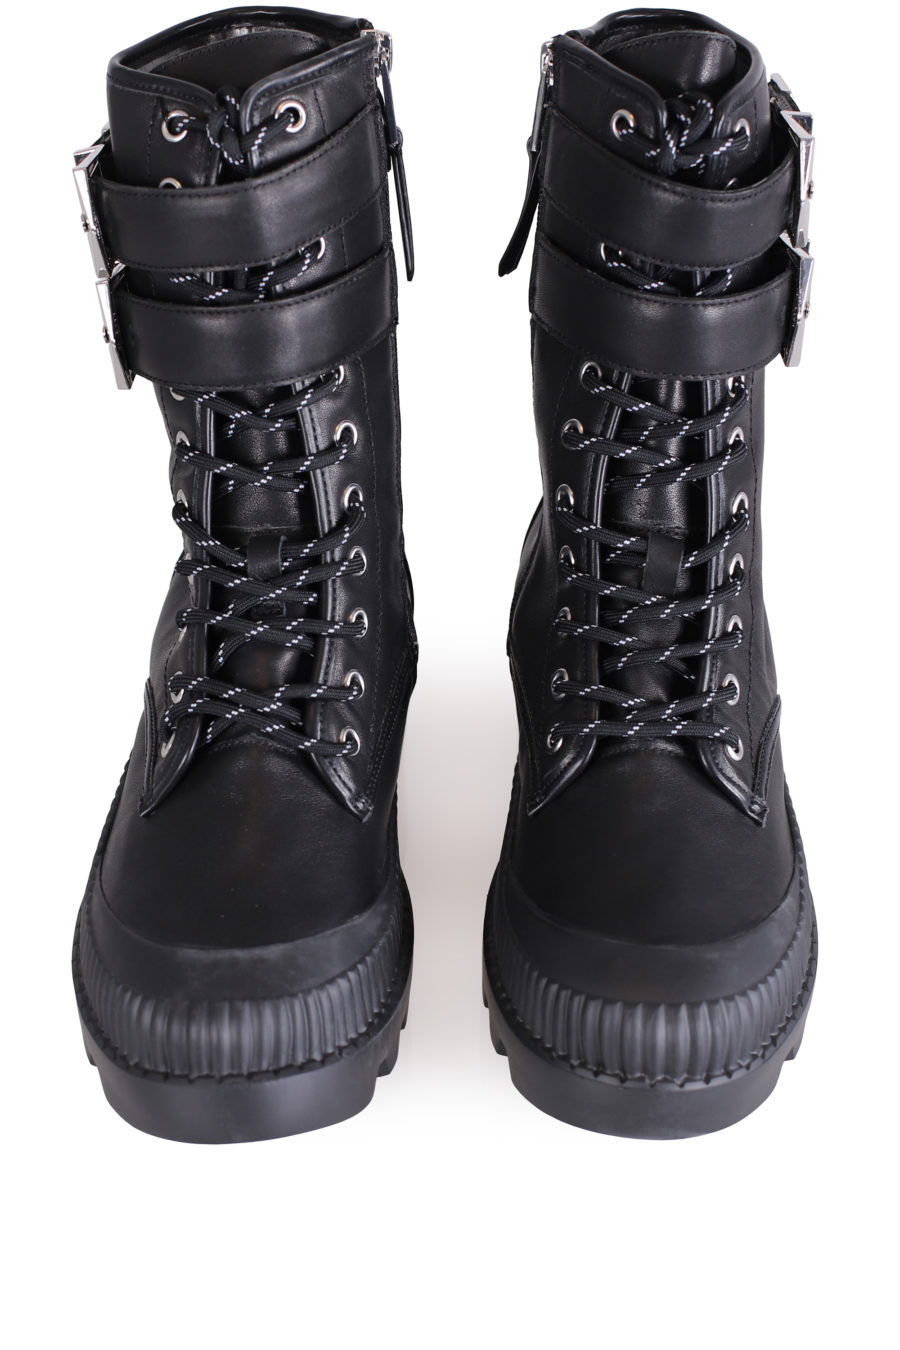 Trekka" boots in black with logo - IMG 0786